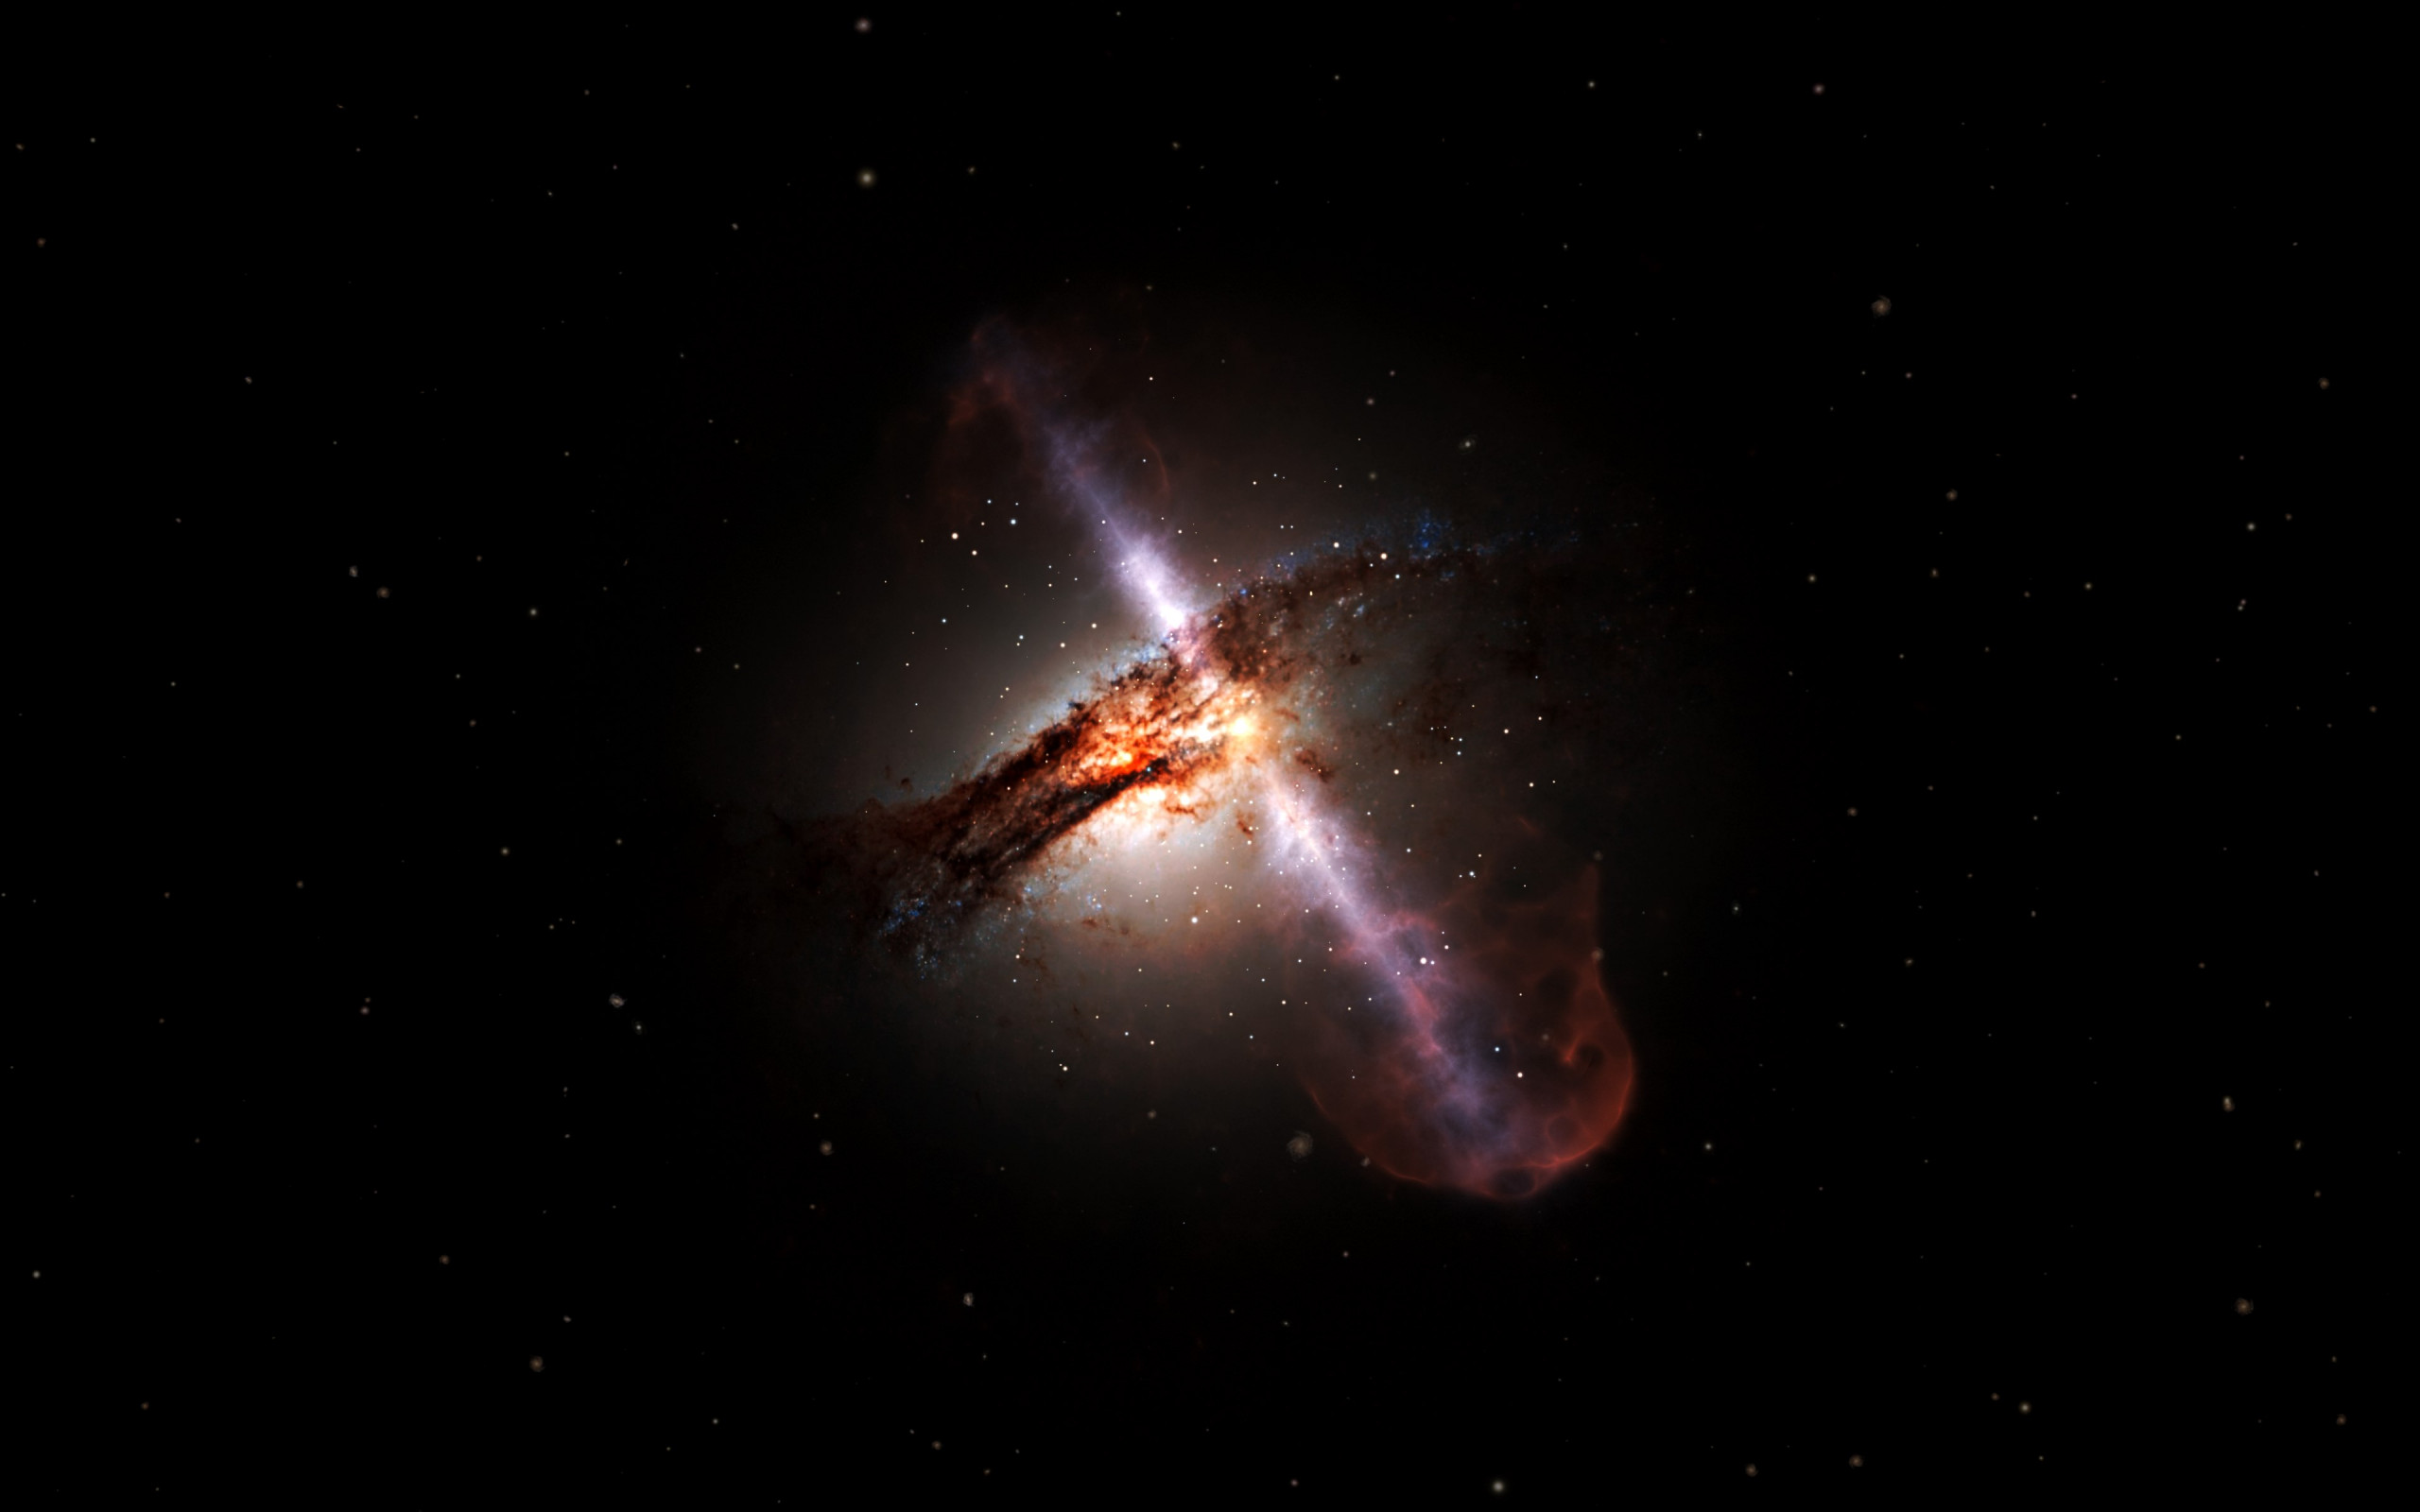 Supermassive black hole wallpaper 2560x1600